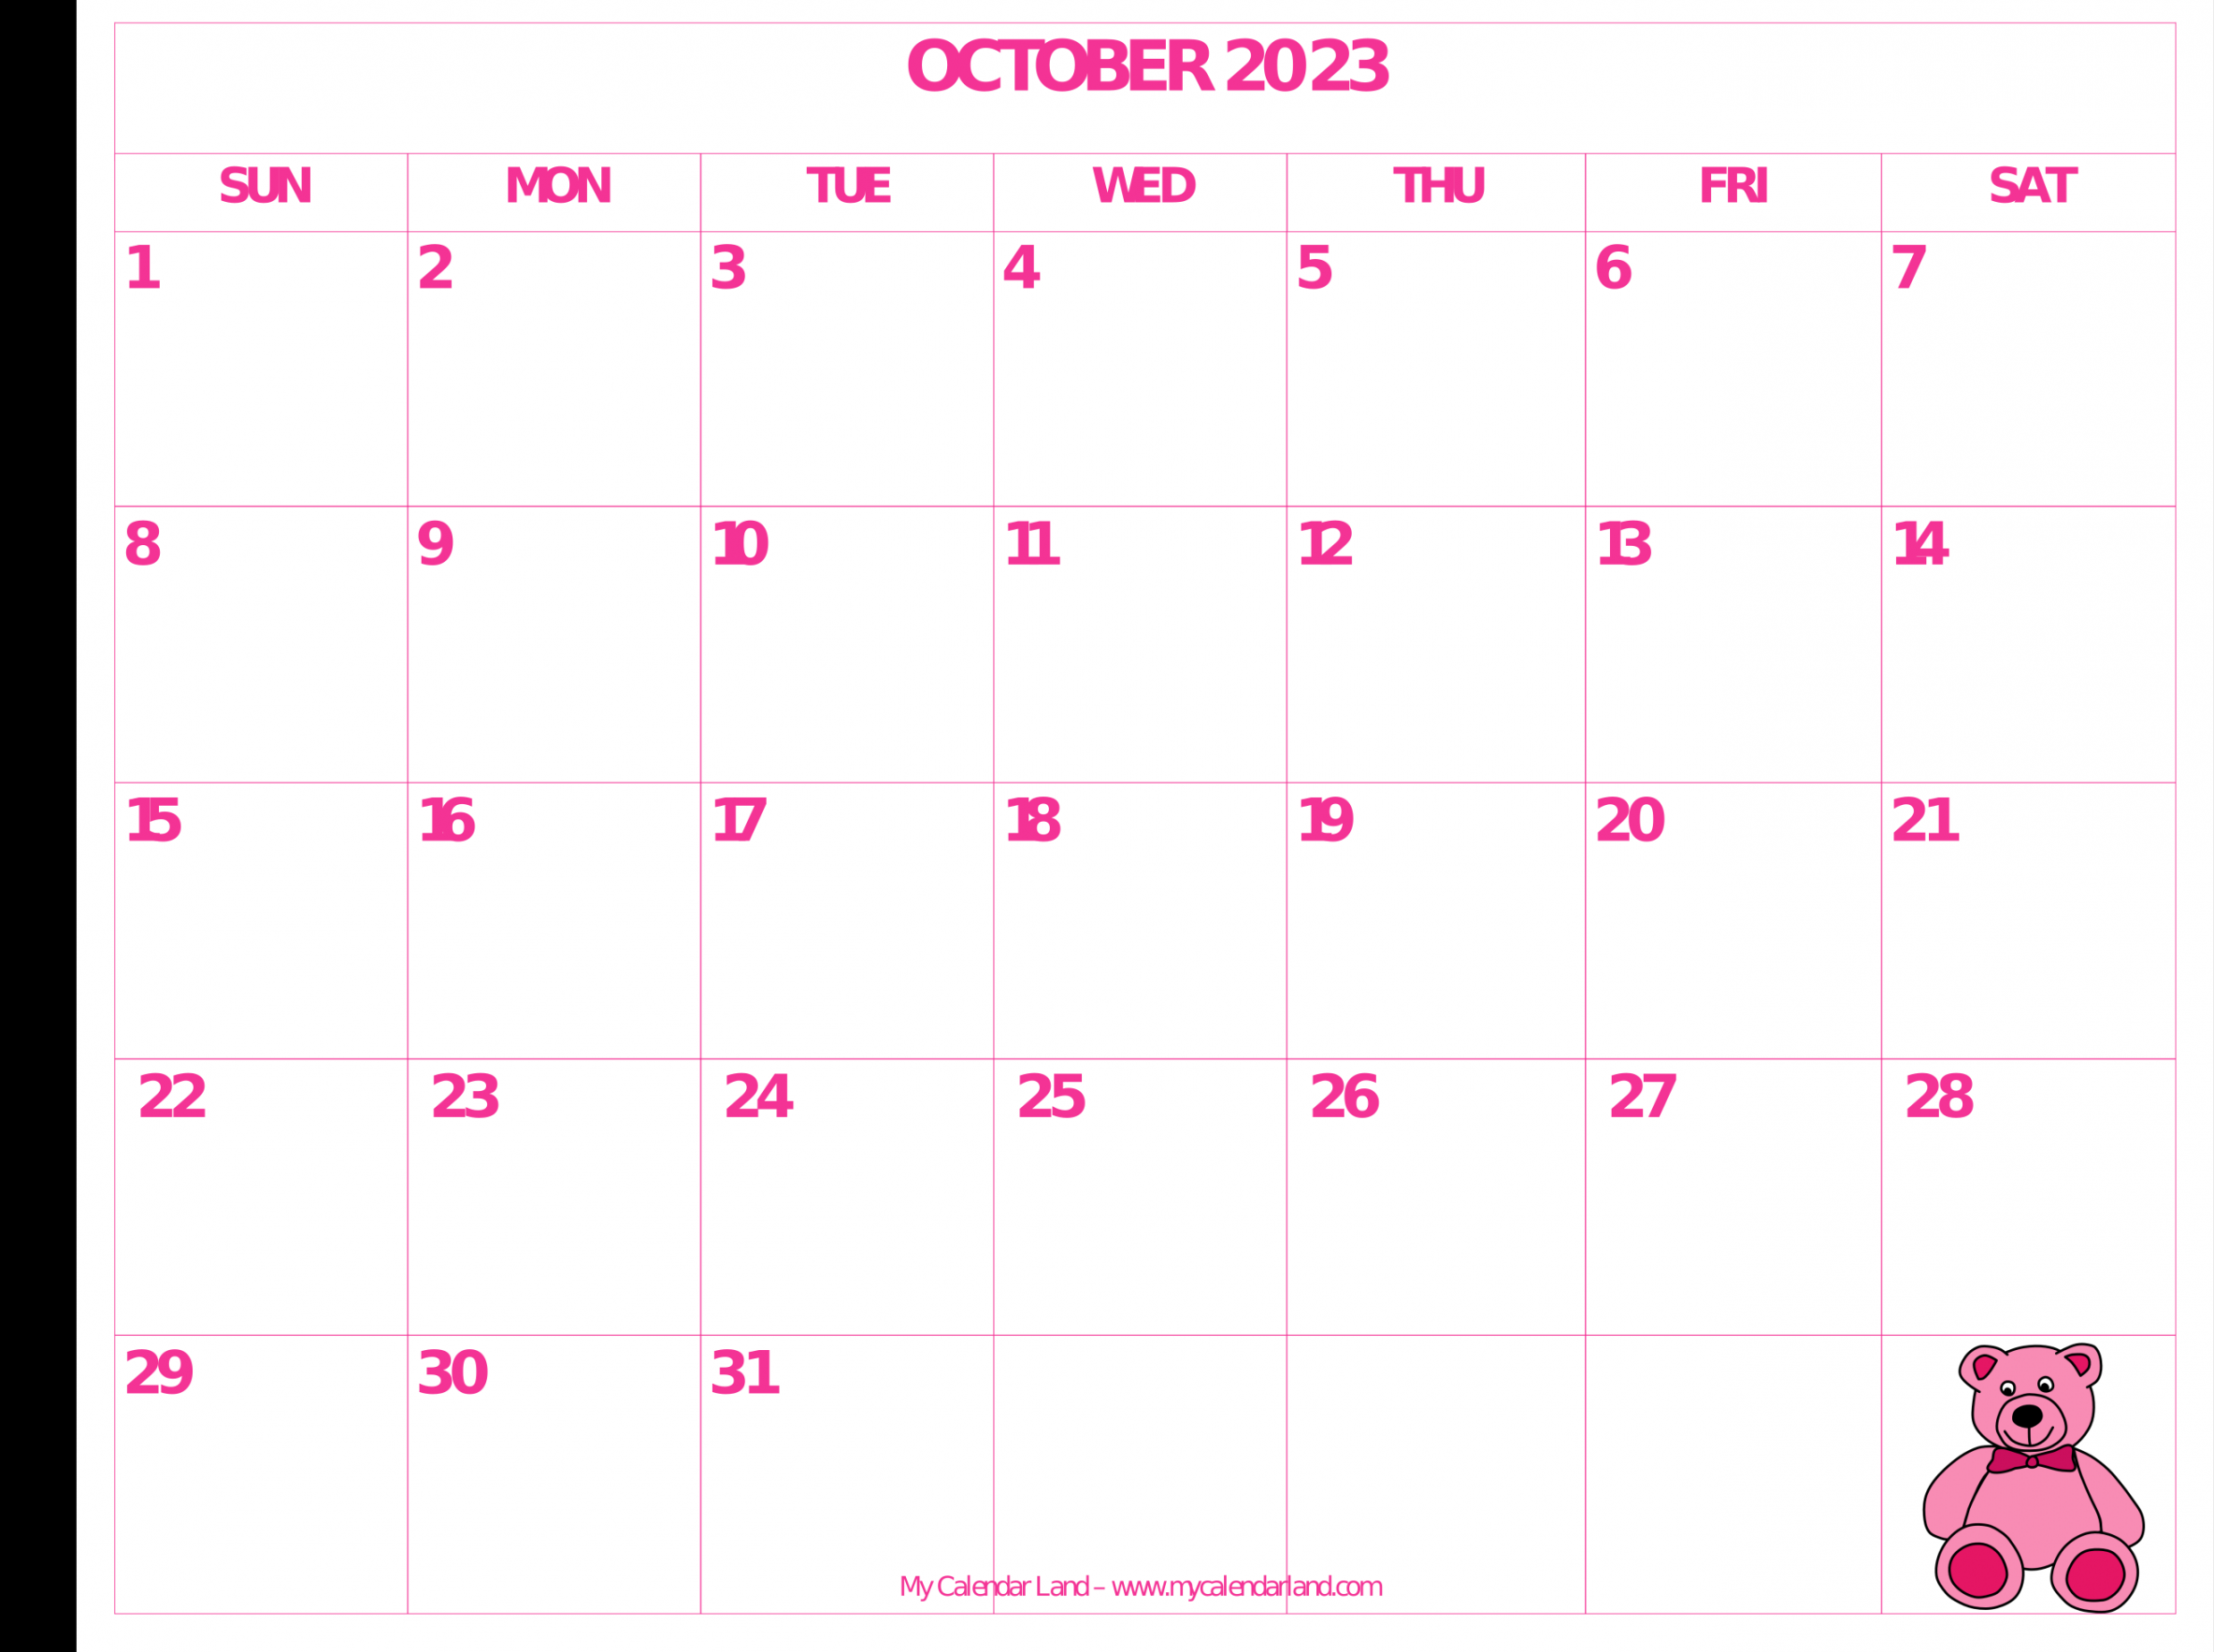 October  Calendar - My Calendar Land